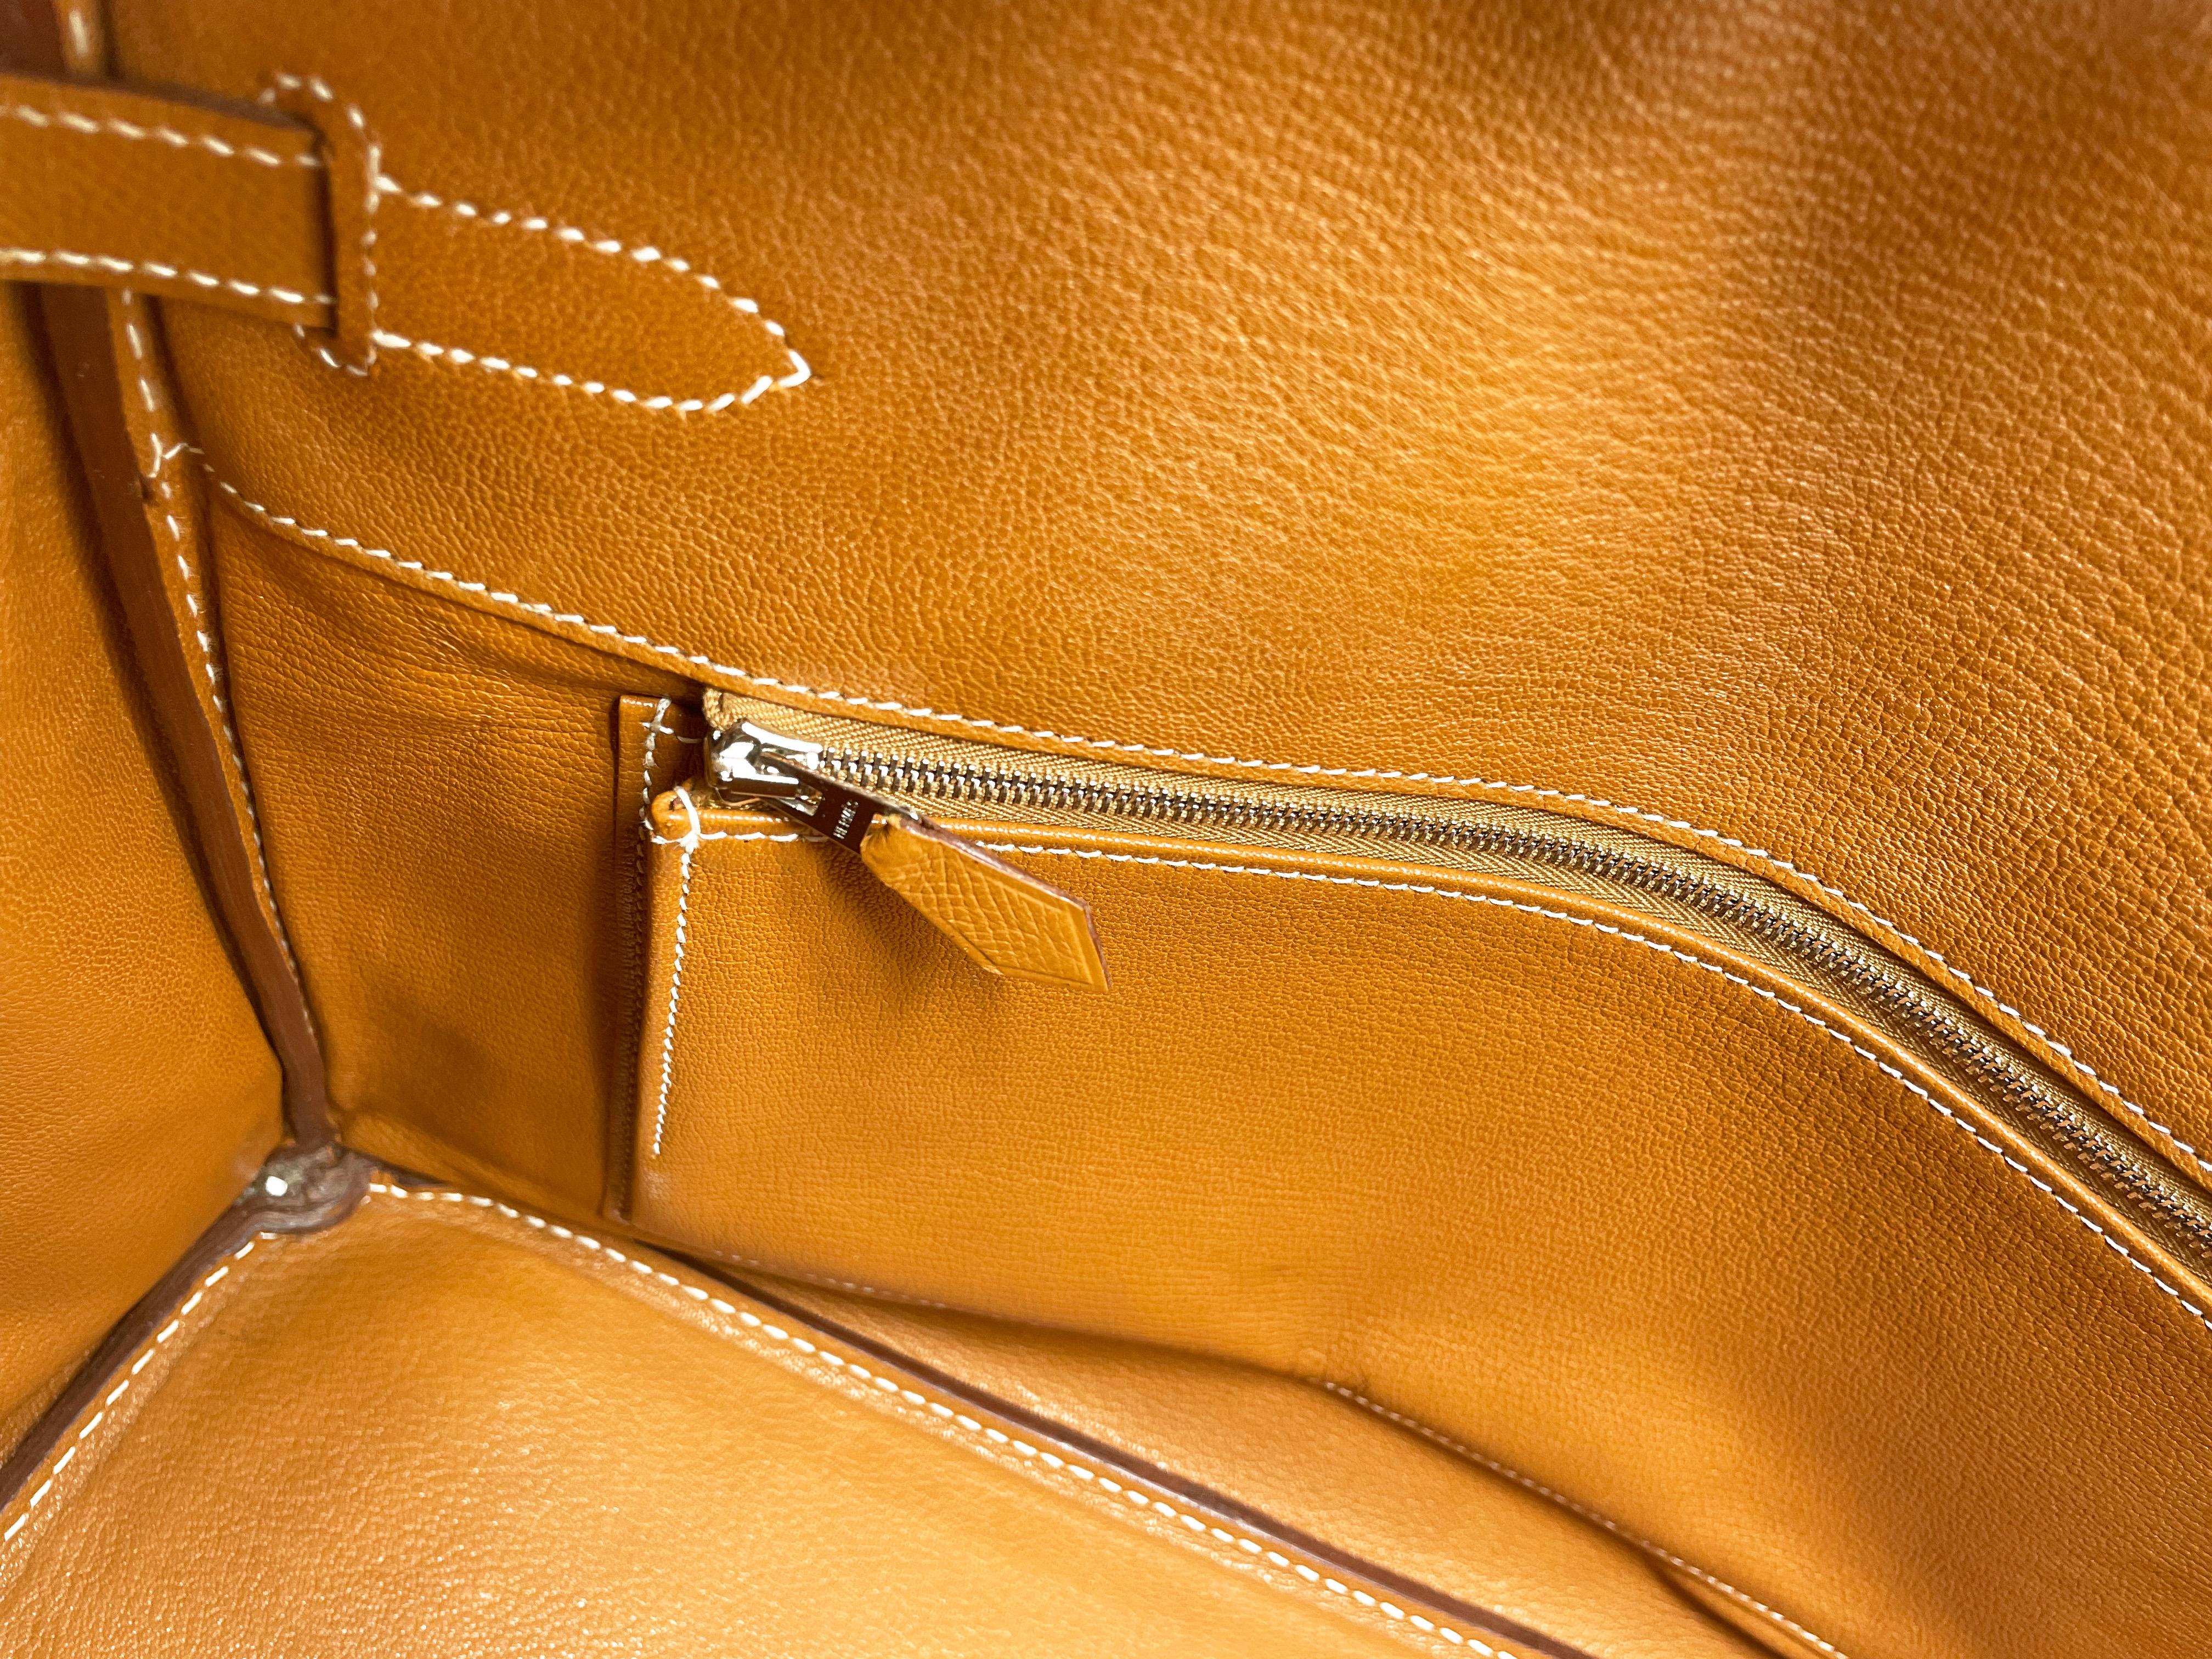 Hermès Birkin 35 Gold handbag in Espom leather and white stitching 2